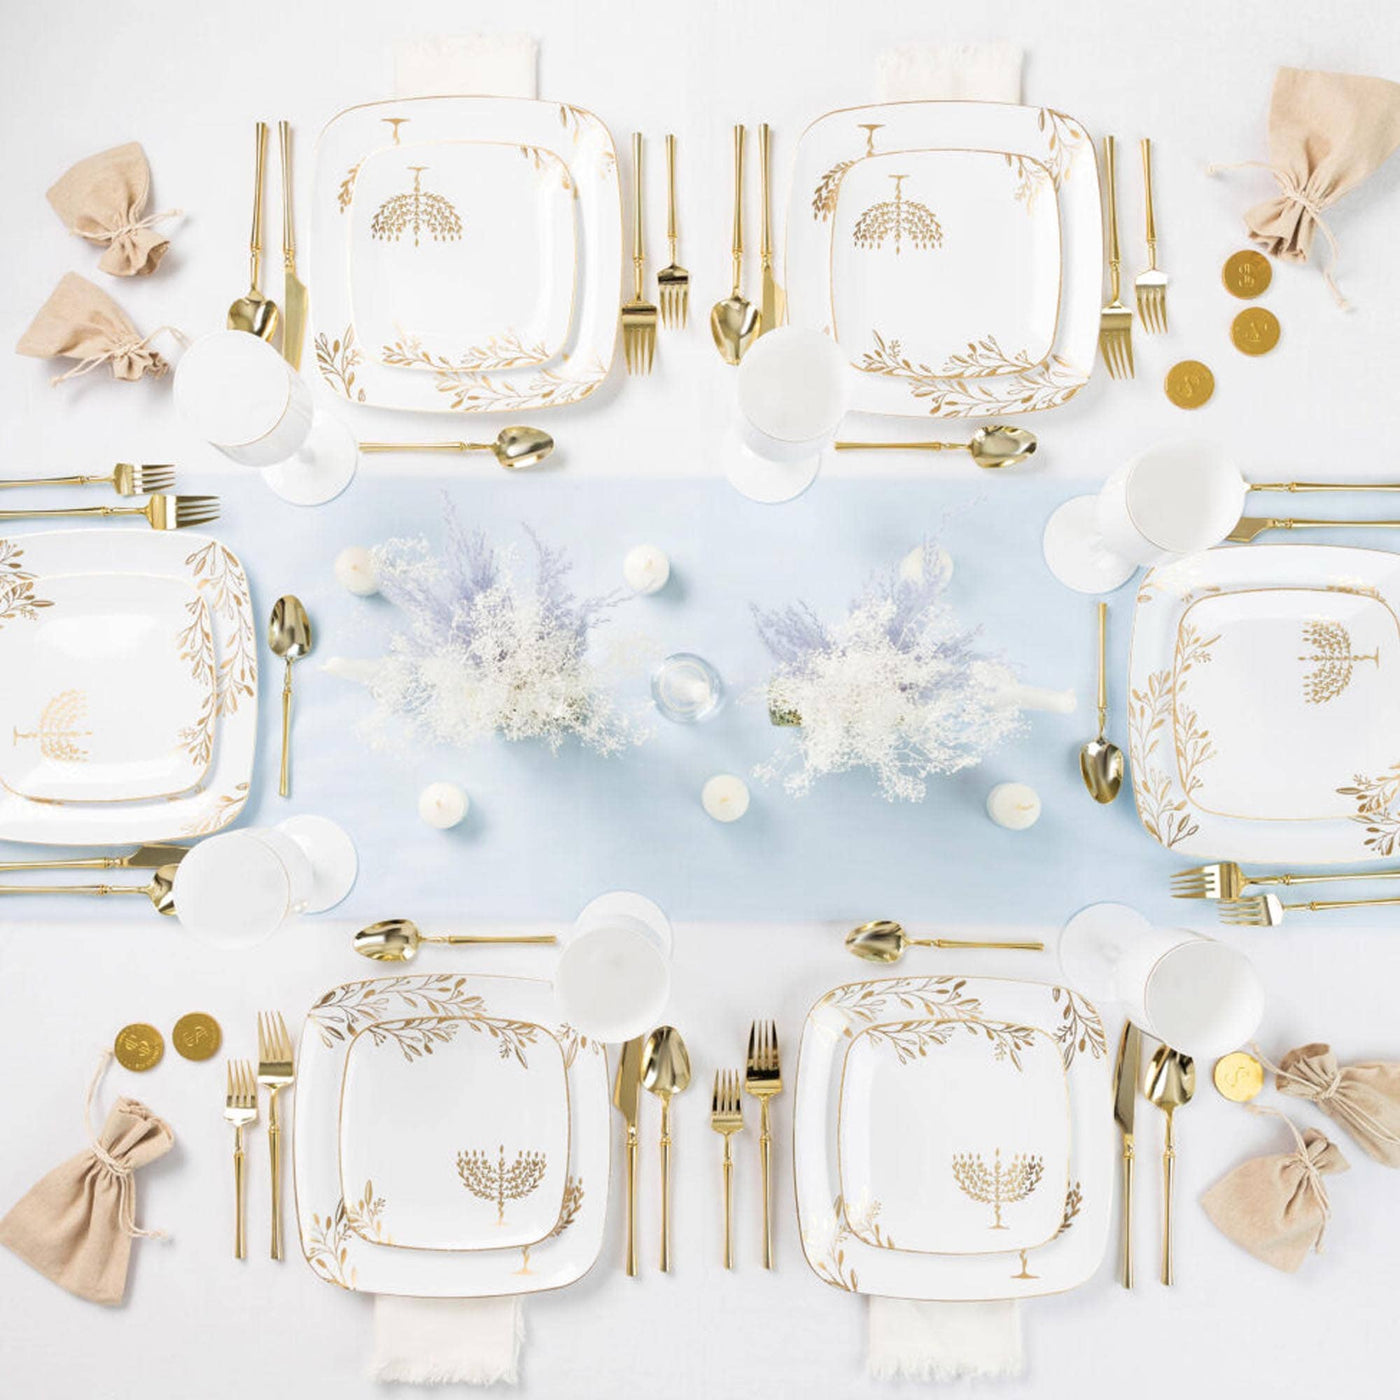 Disposable Salad Hanukkah Plates in White & Gold